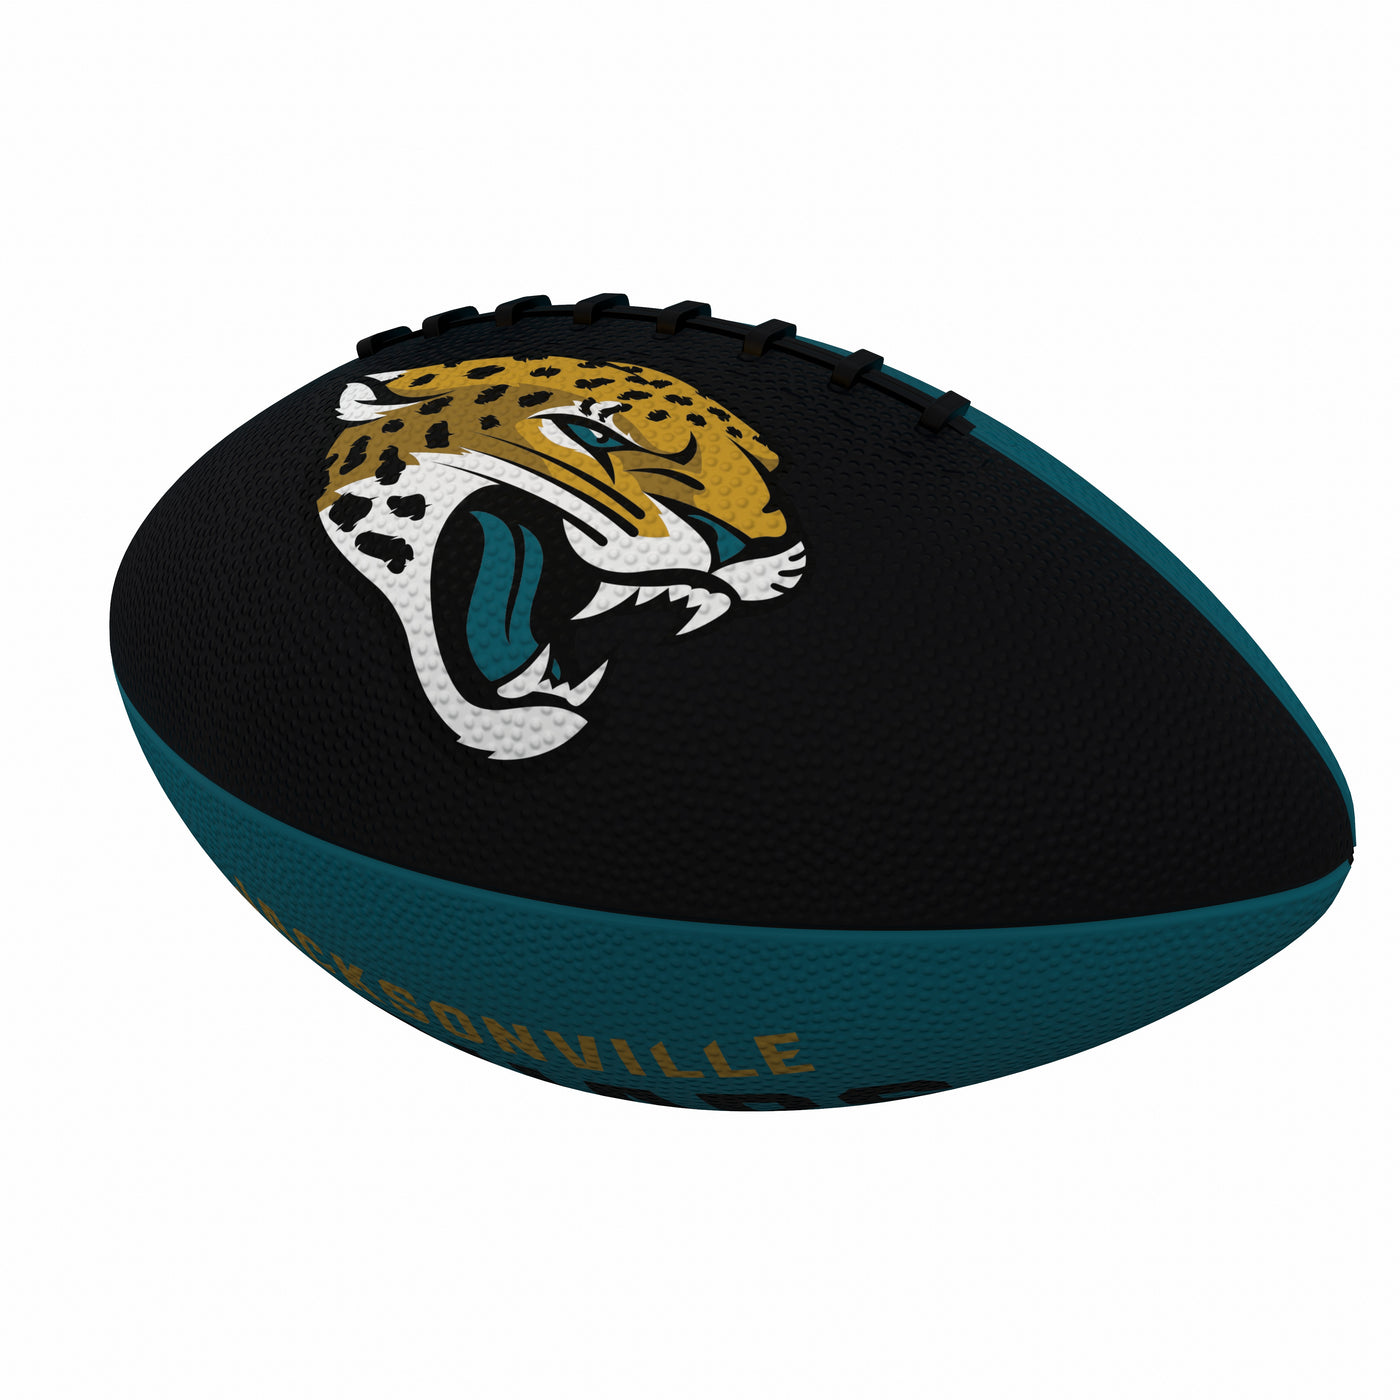 Jacksonville Jaguars Pinwheel Logo Junior-Size Rubber Football